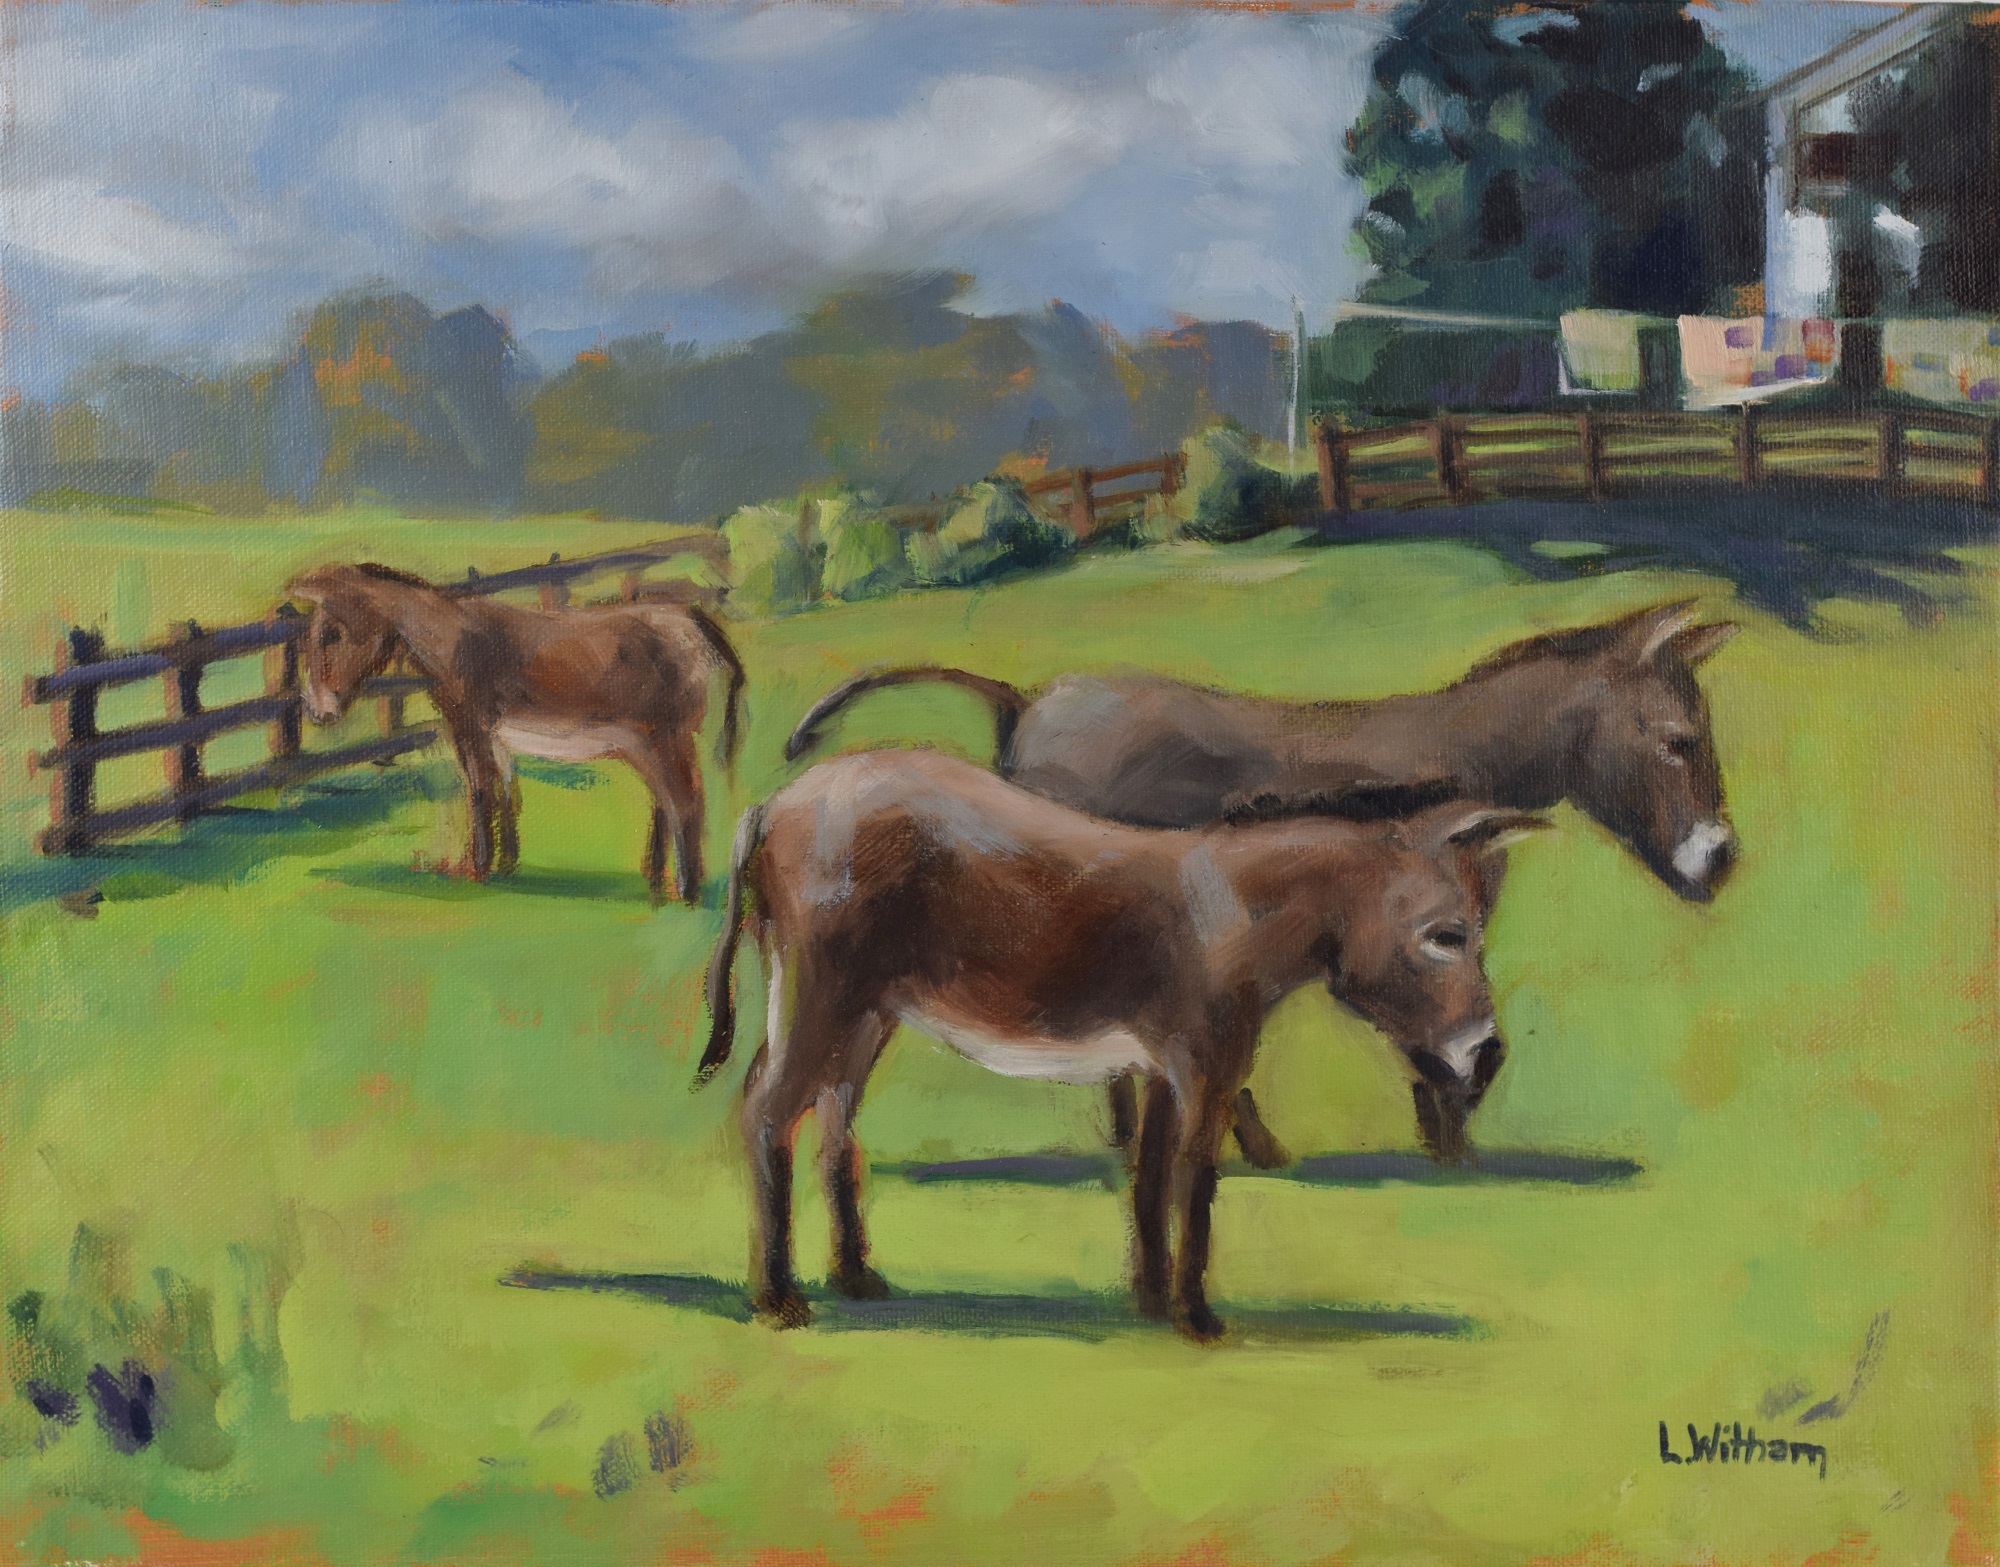 Three Donkeys, Oil on canvas, 11x14